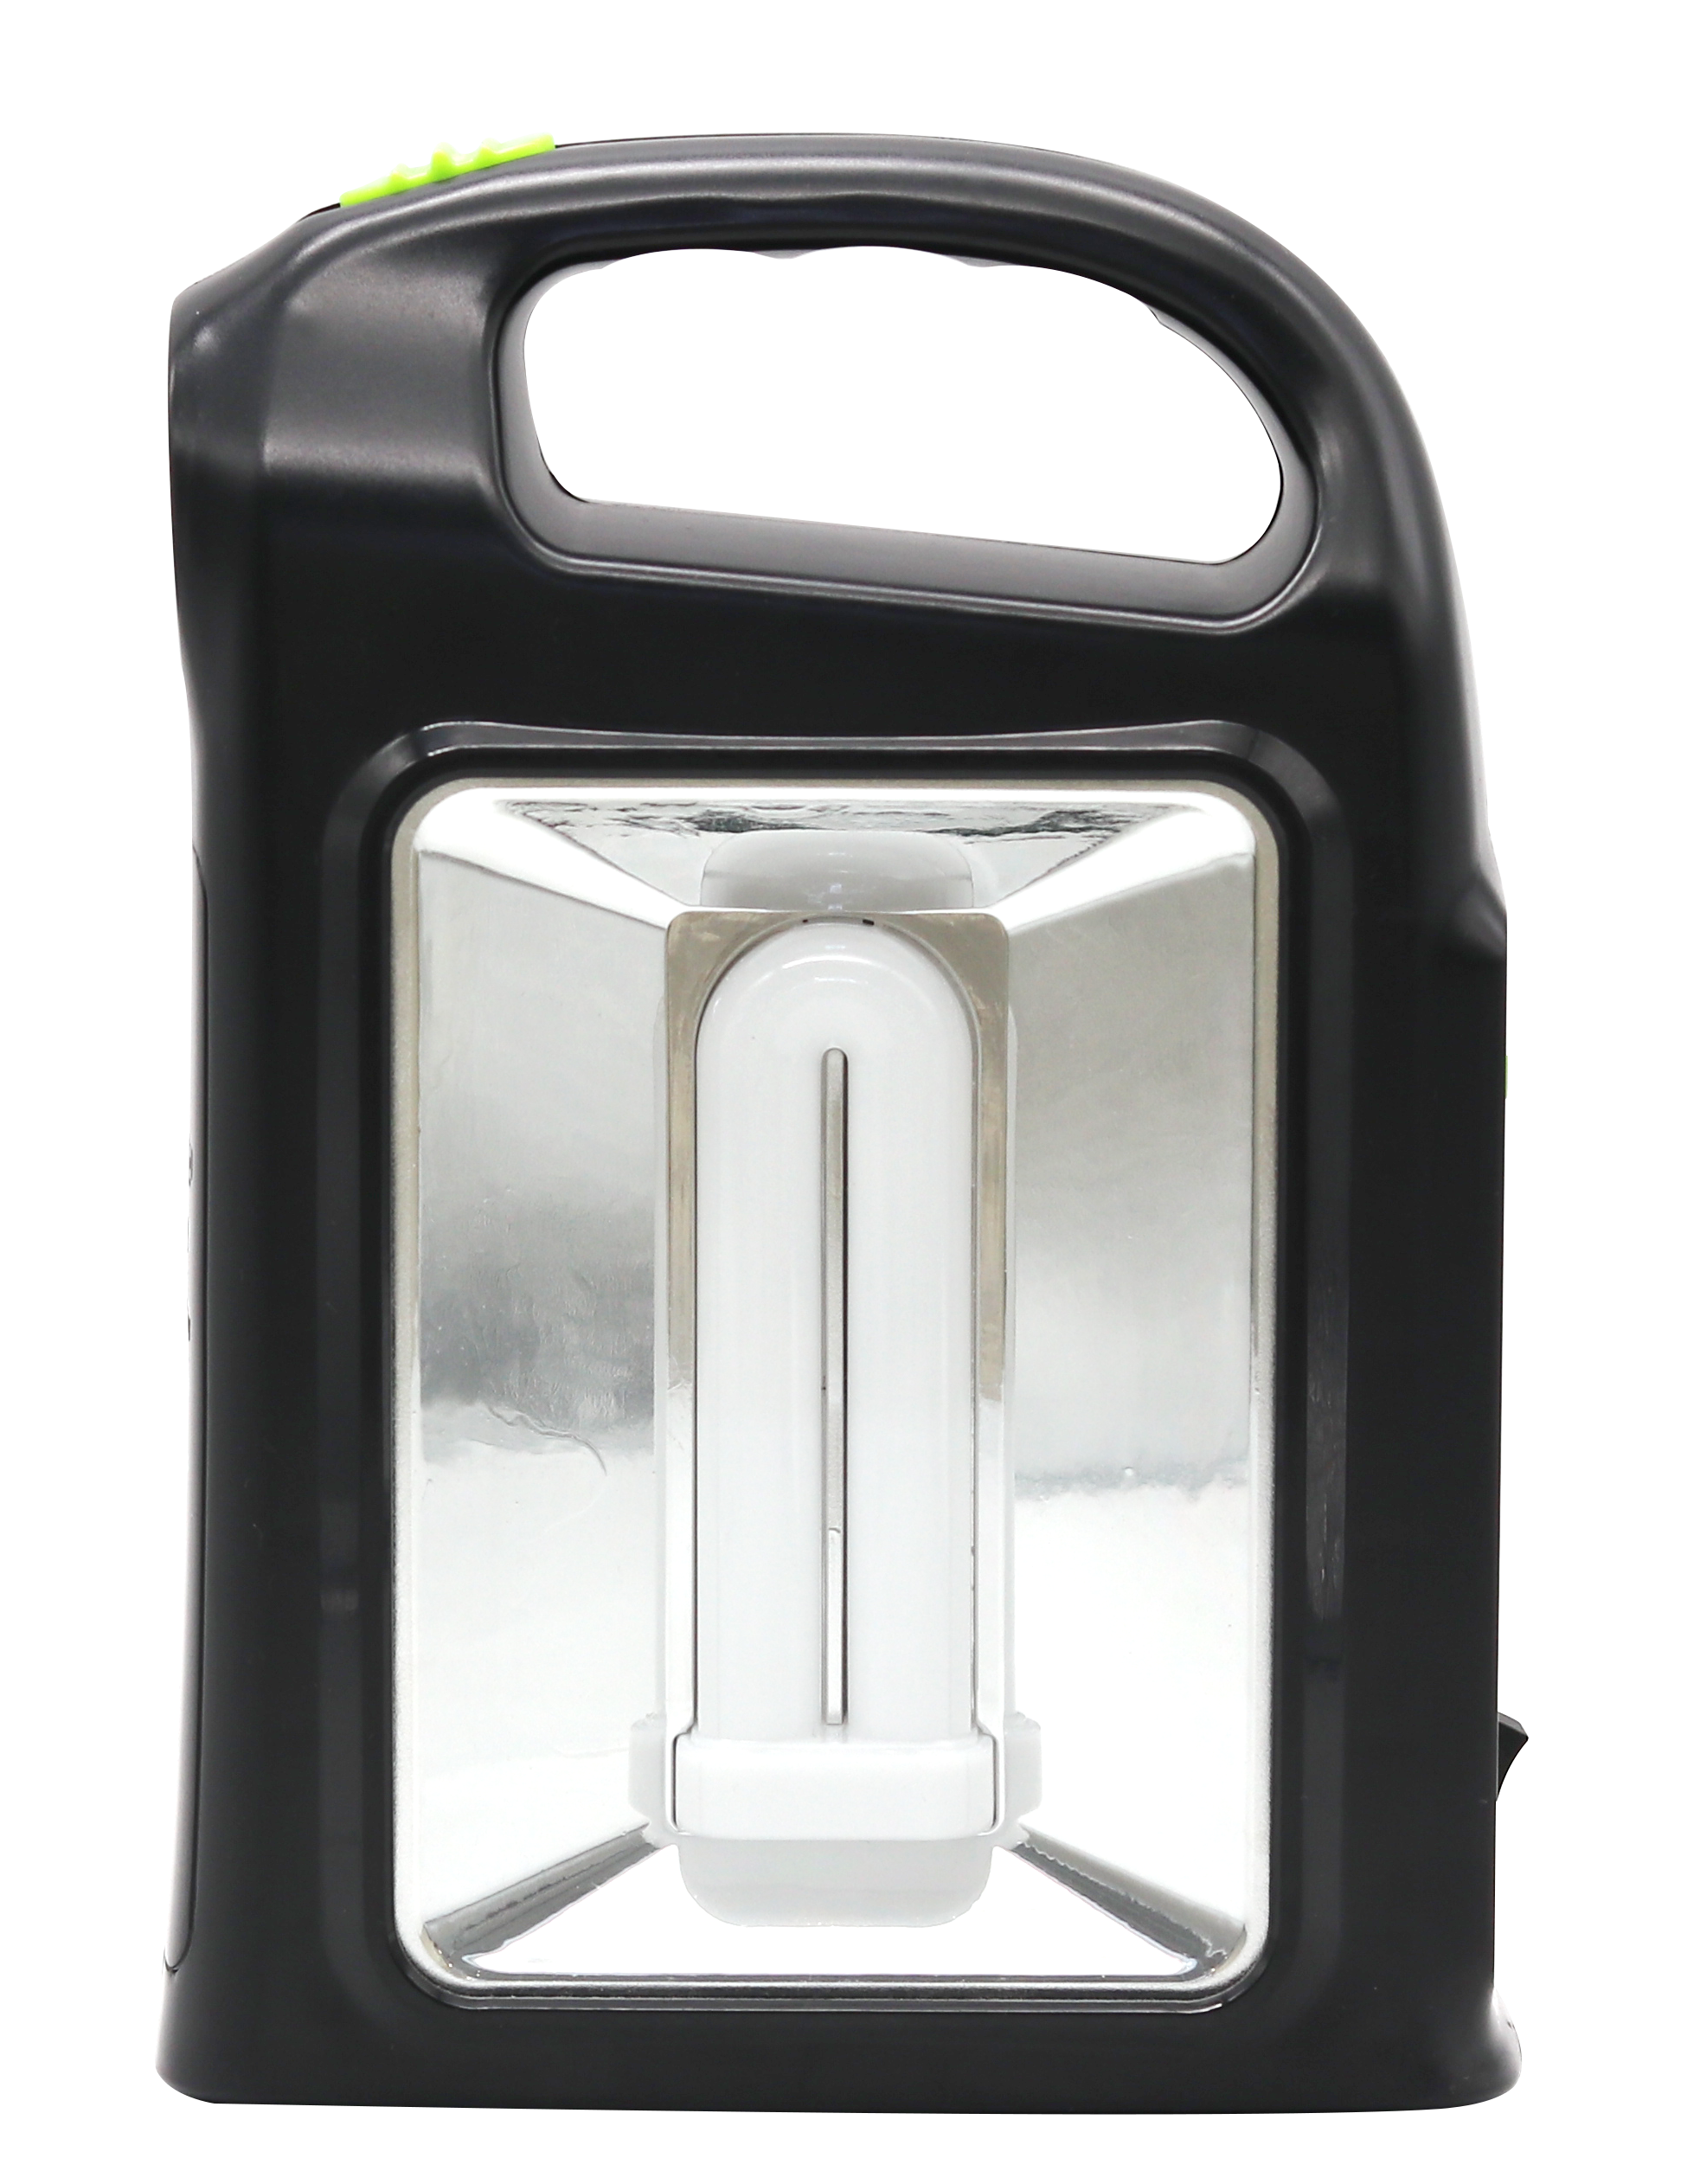 Mini Portable Solar Kit With Spotlights, Lamp, Flashlight and Solar Panel